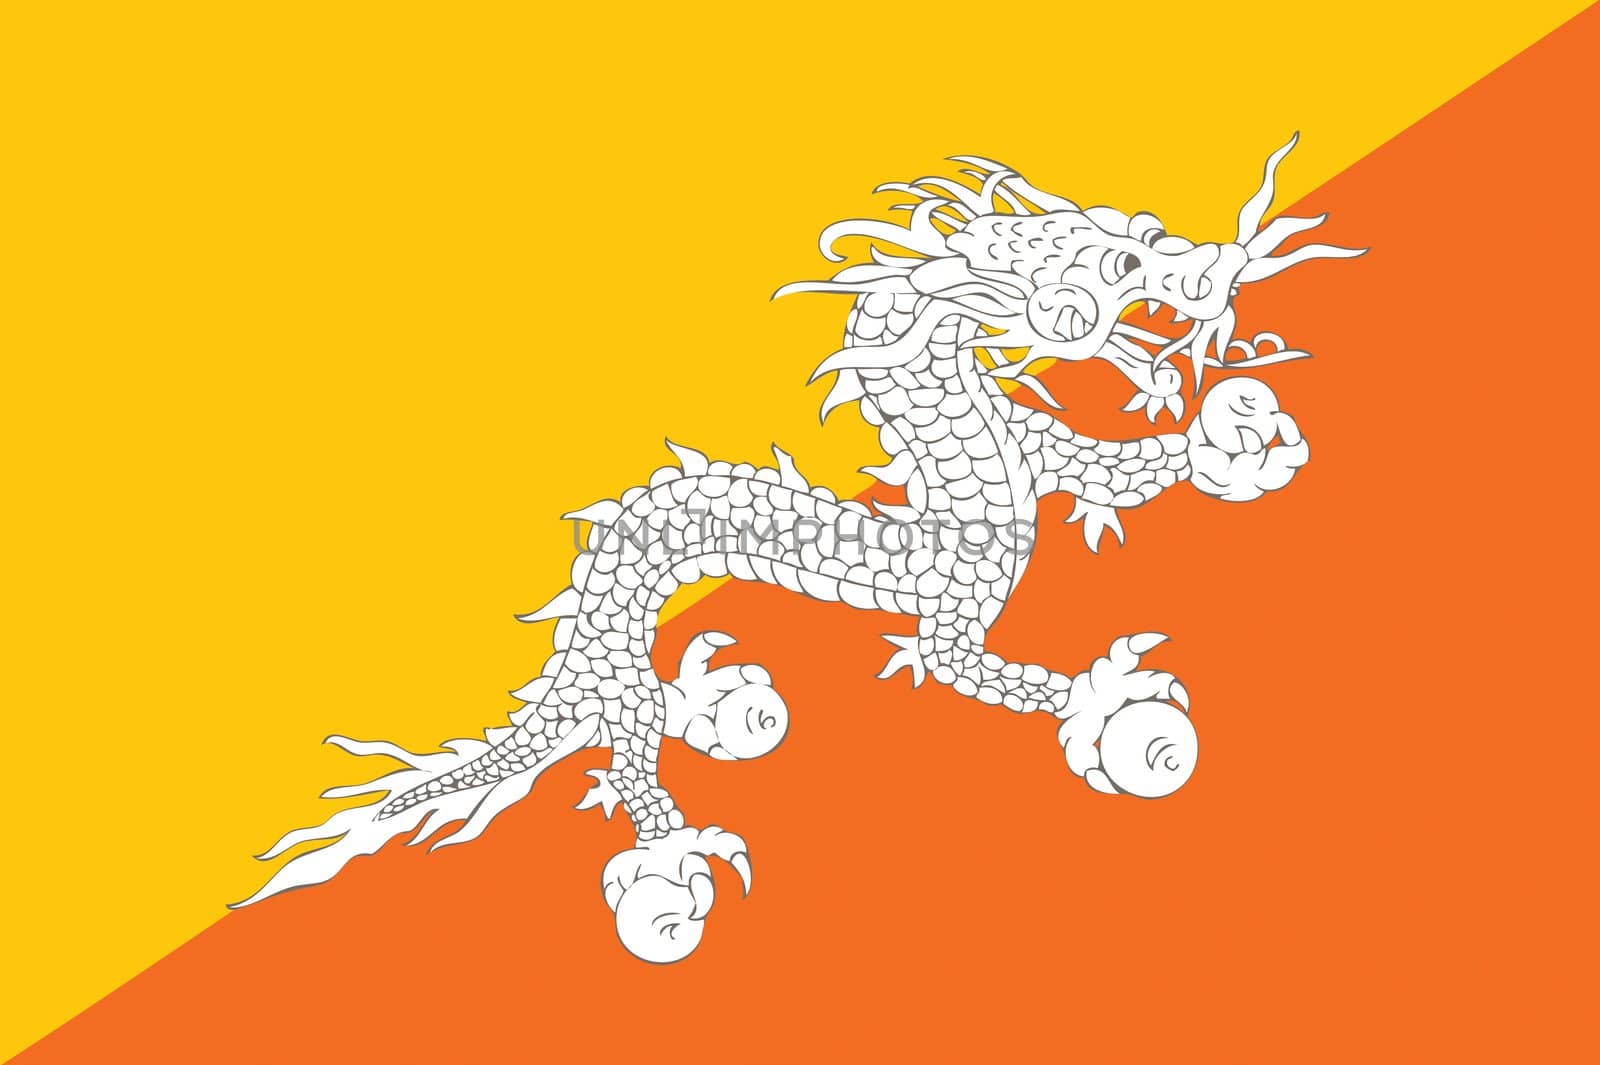 national flag of Bhutan